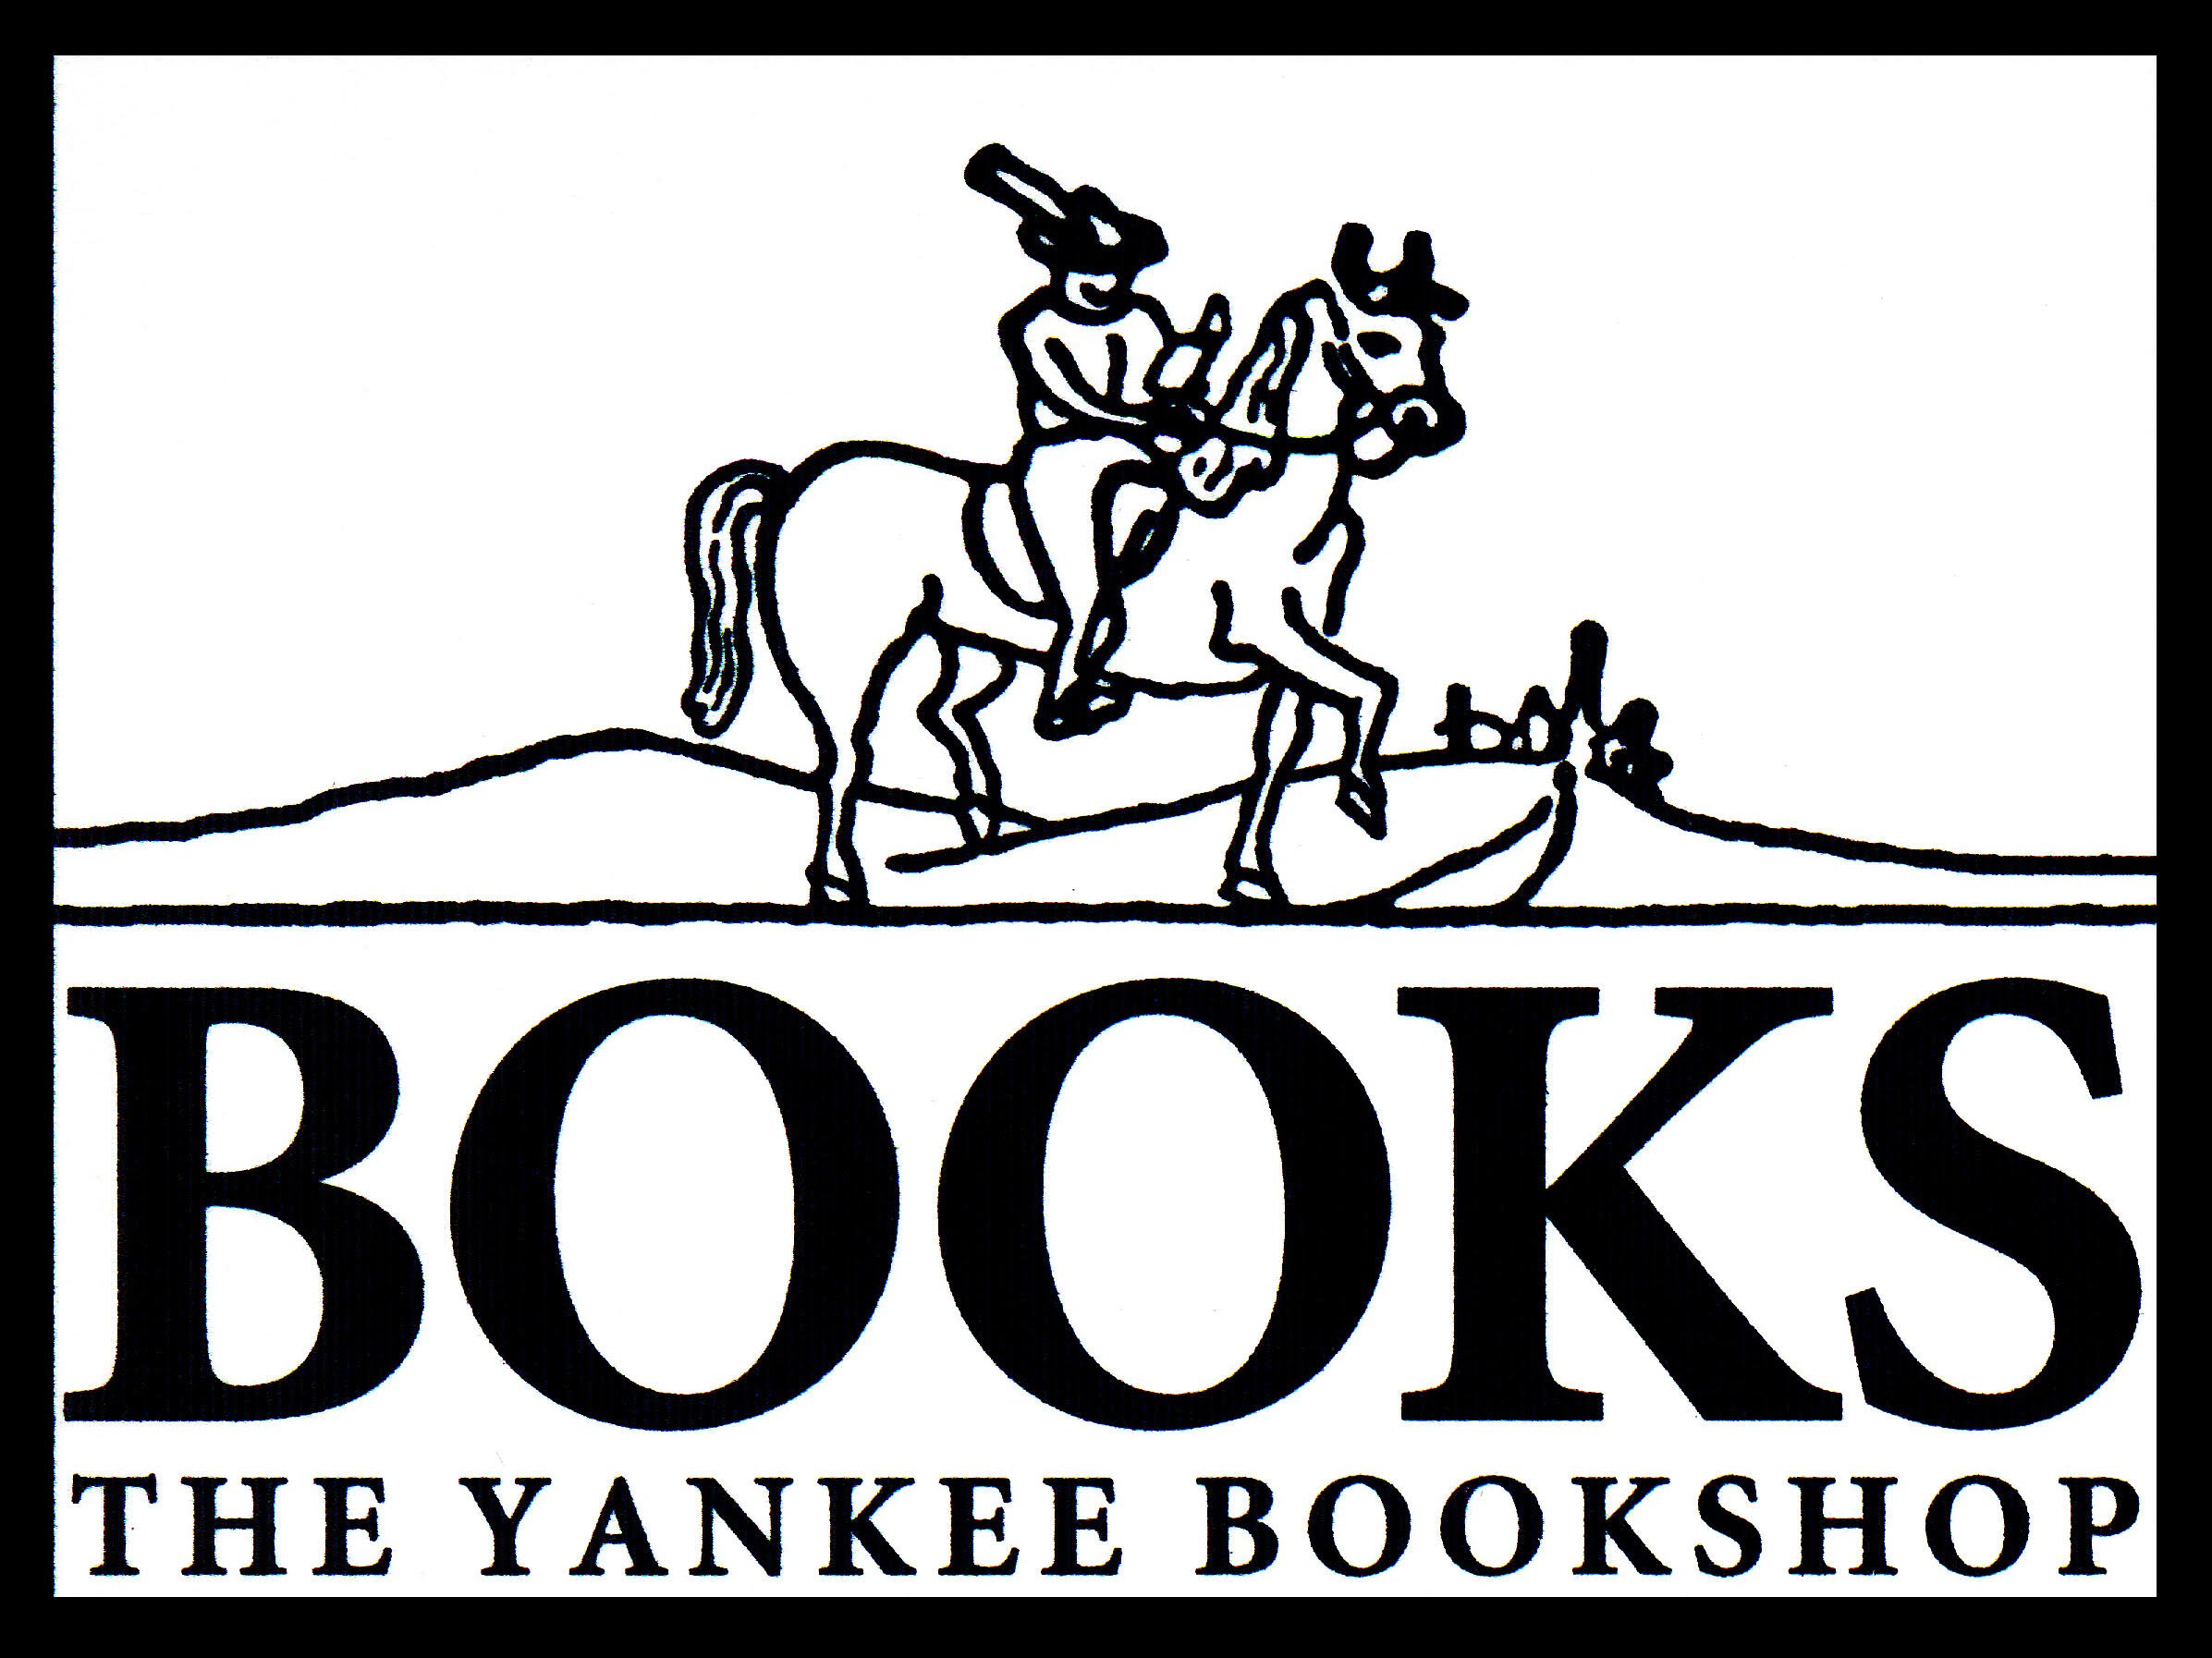 The Yankee Bookshop